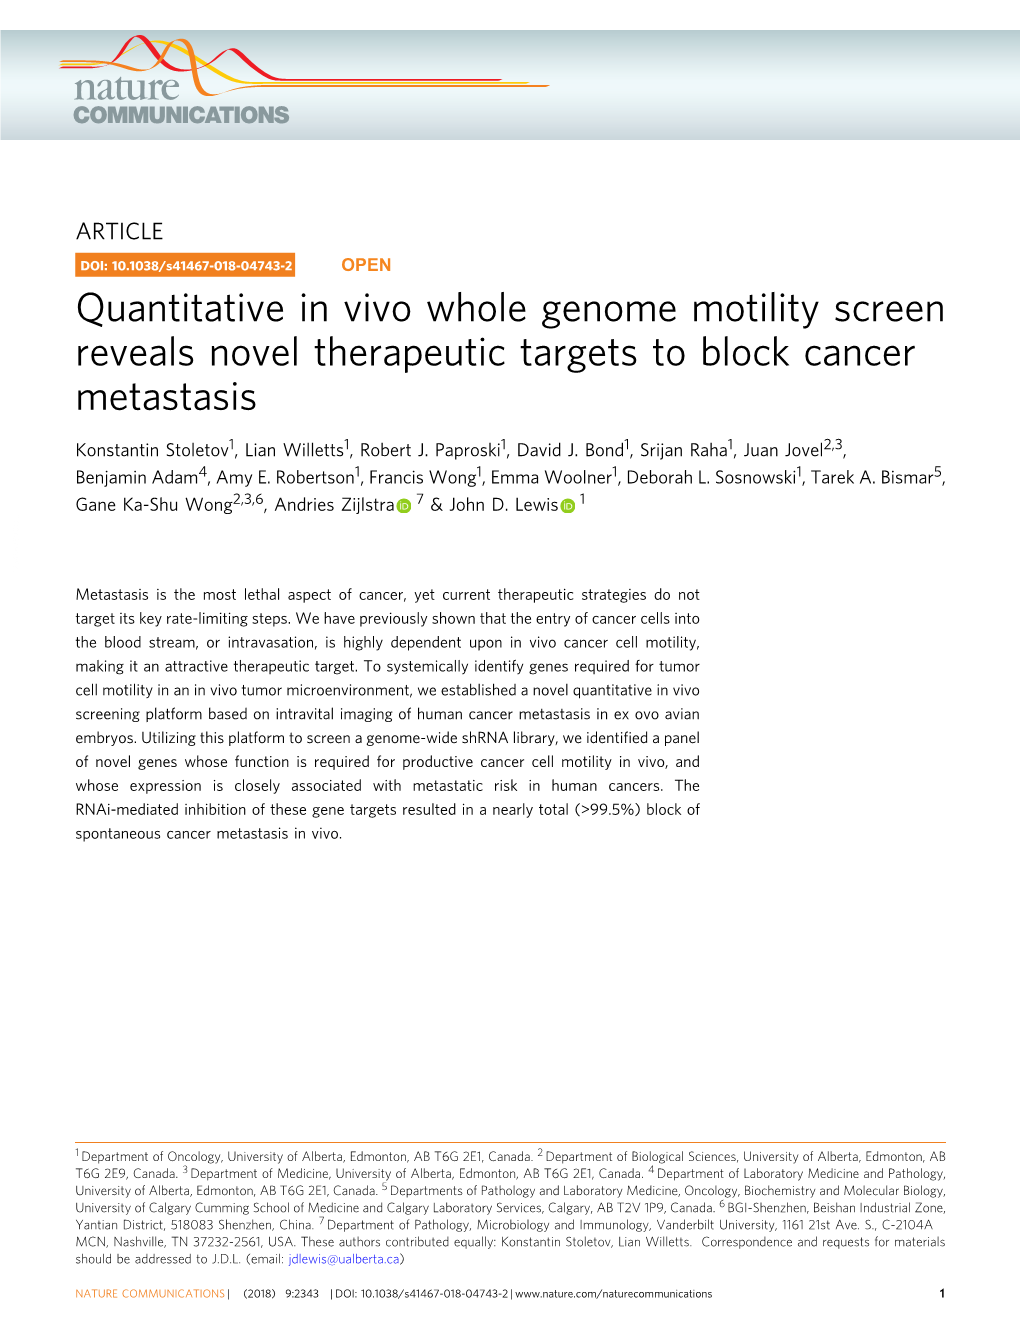 Quantitative in Vivo Whole Genome Motility Screen Reveals Novel Therapeutic Targets to Block Cancer Metastasis